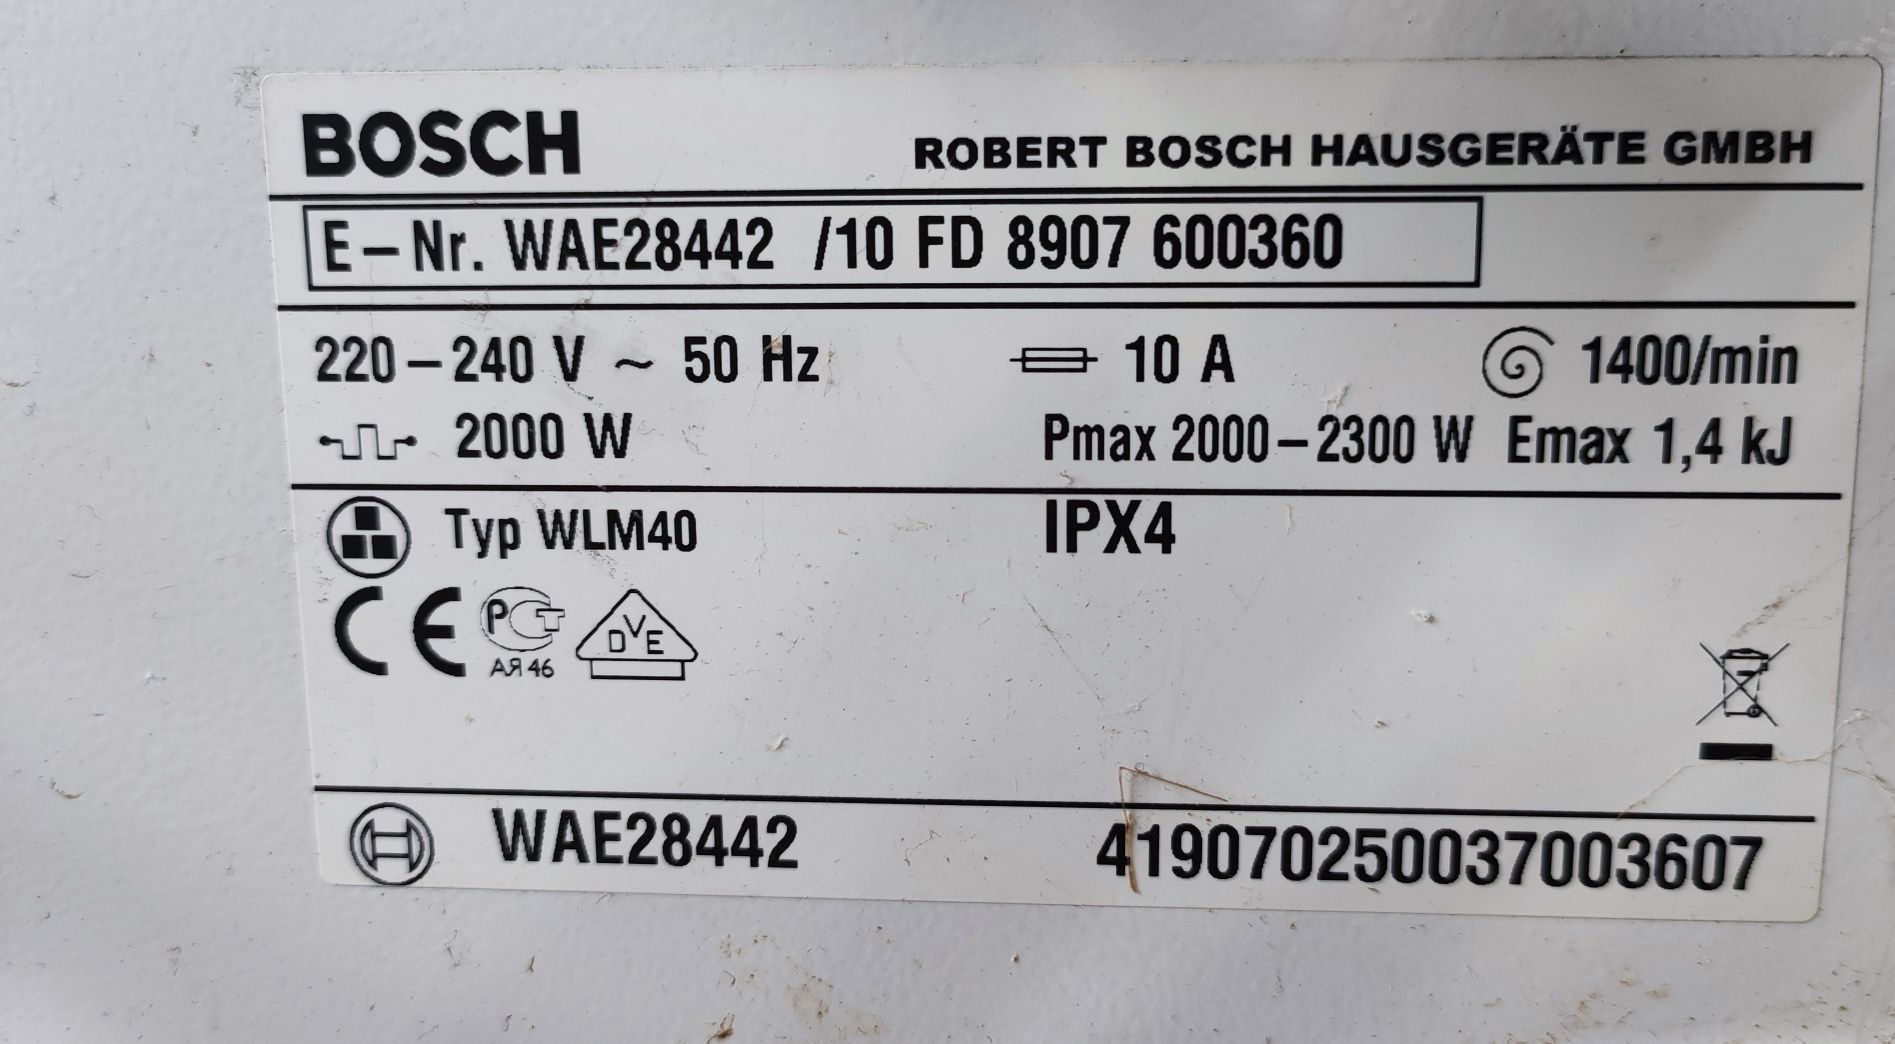 Пральна машина Bosch maxx 7 (Бош )